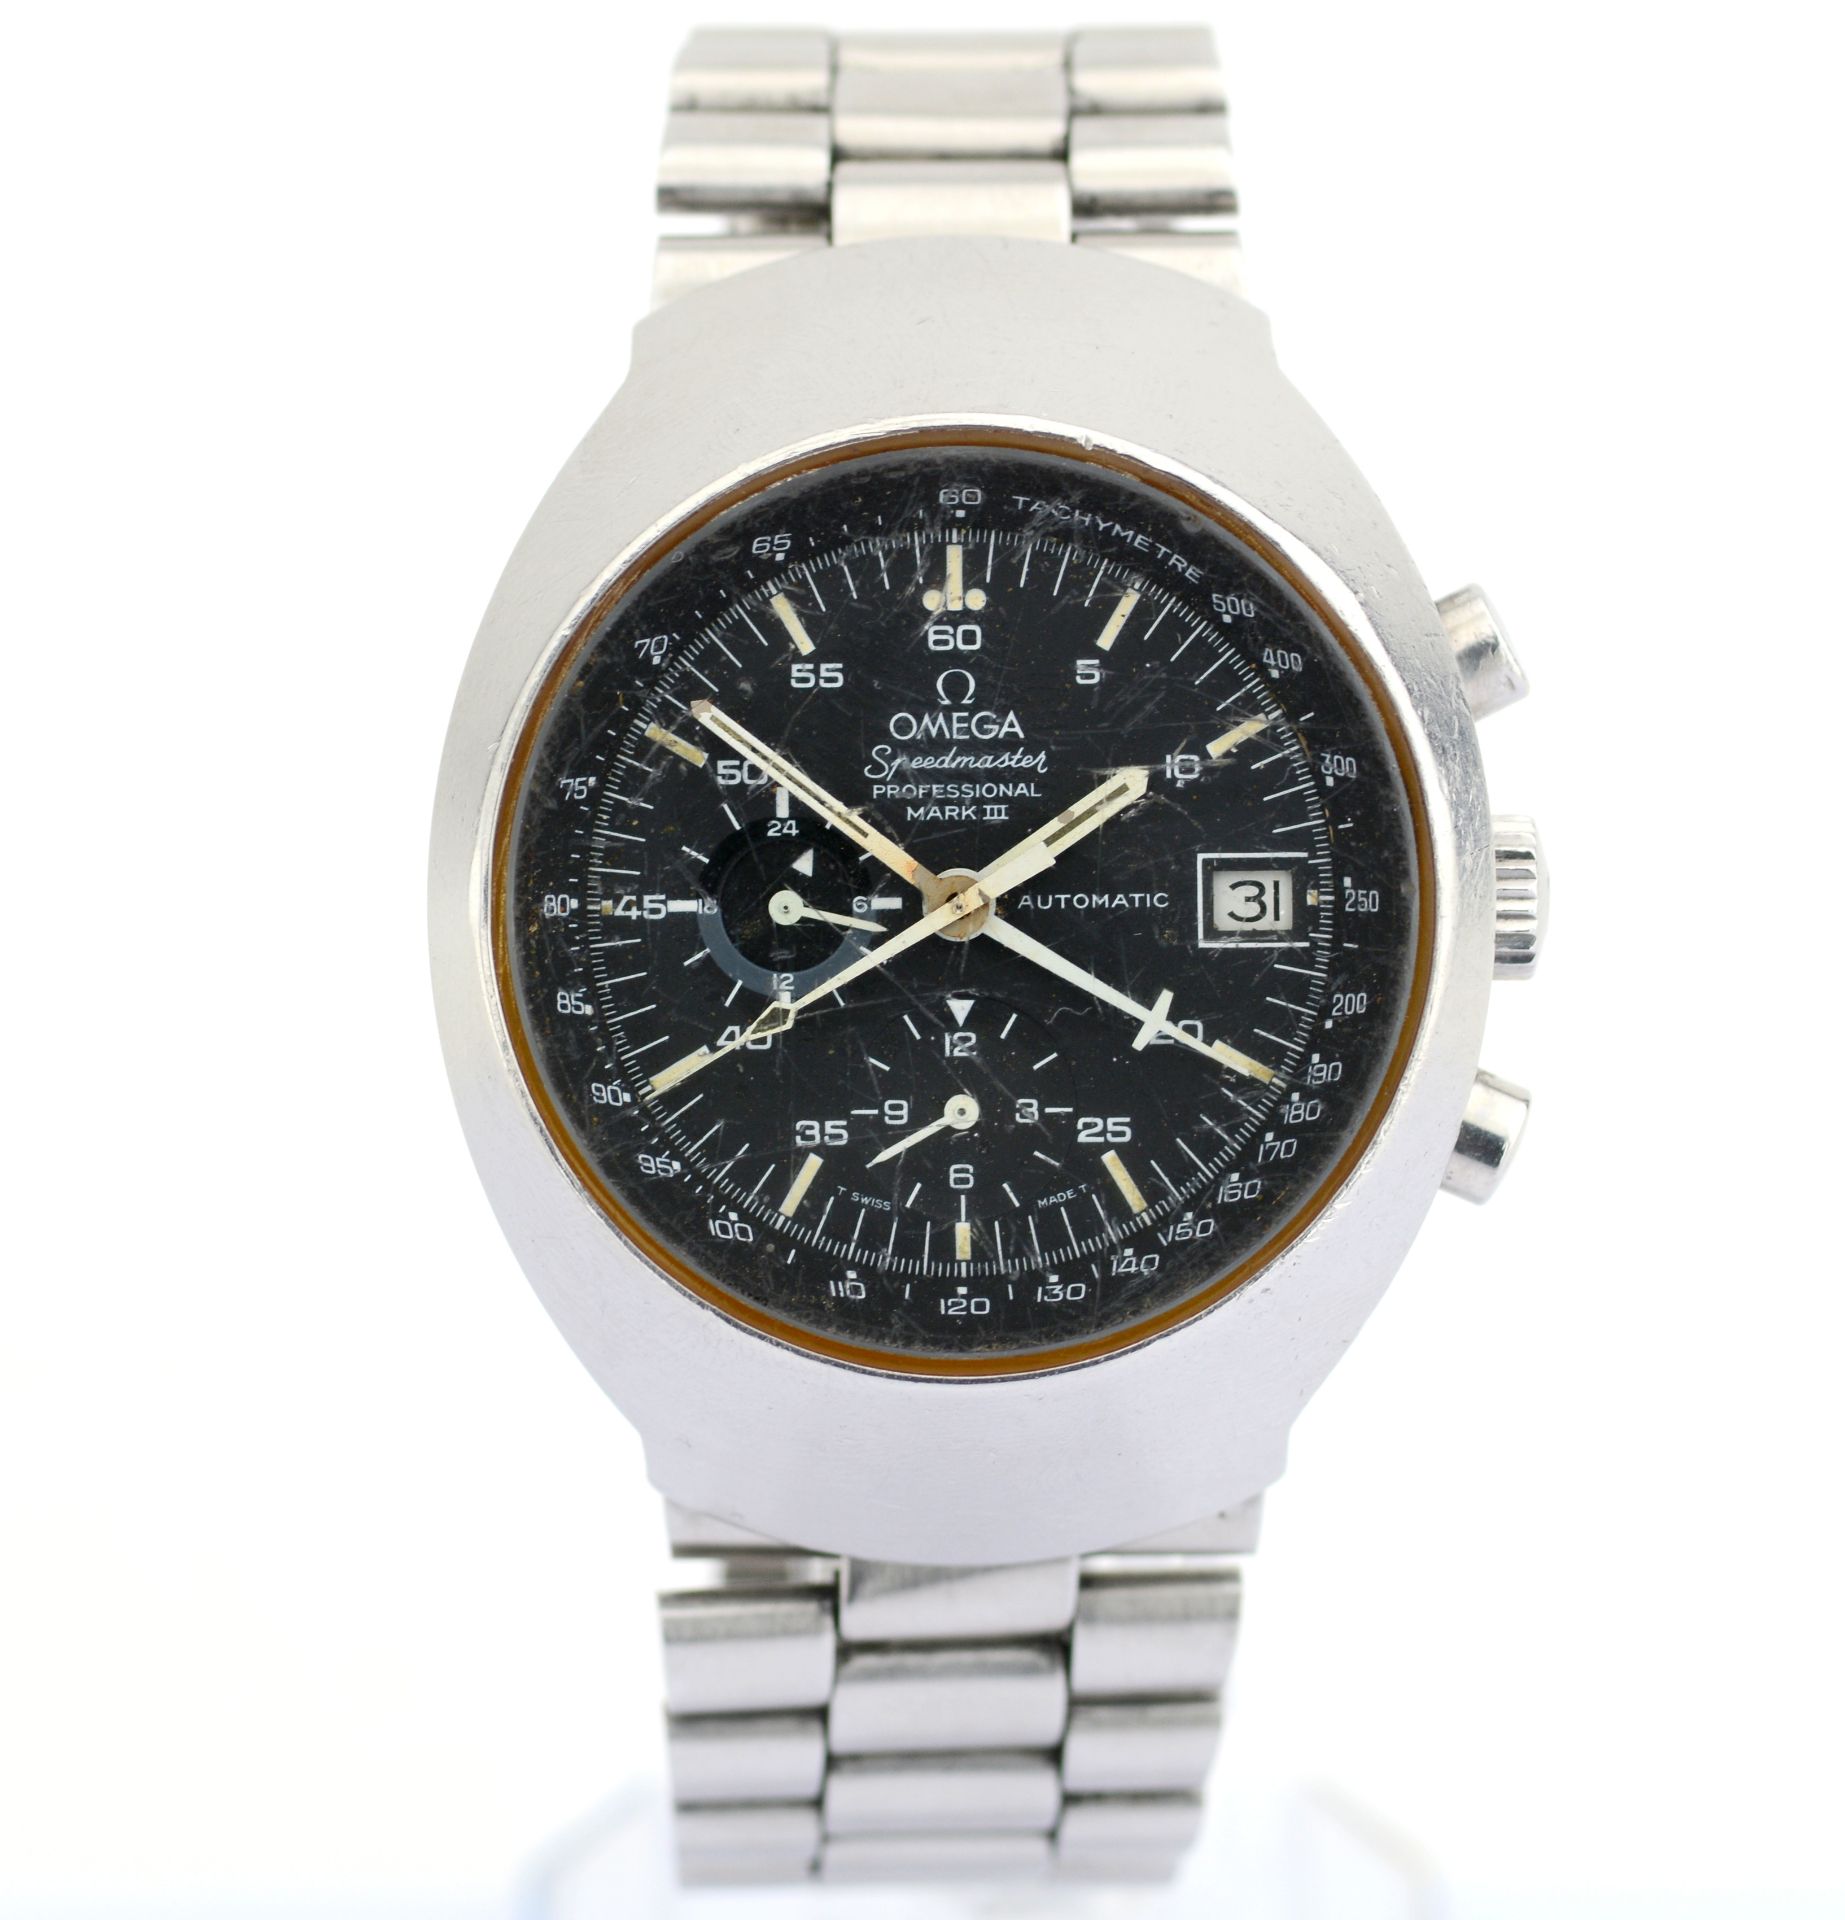 Omega / Speedmaster Mark III - Gentlmen's Gold/Steel Wrist Watch - Image 7 of 7